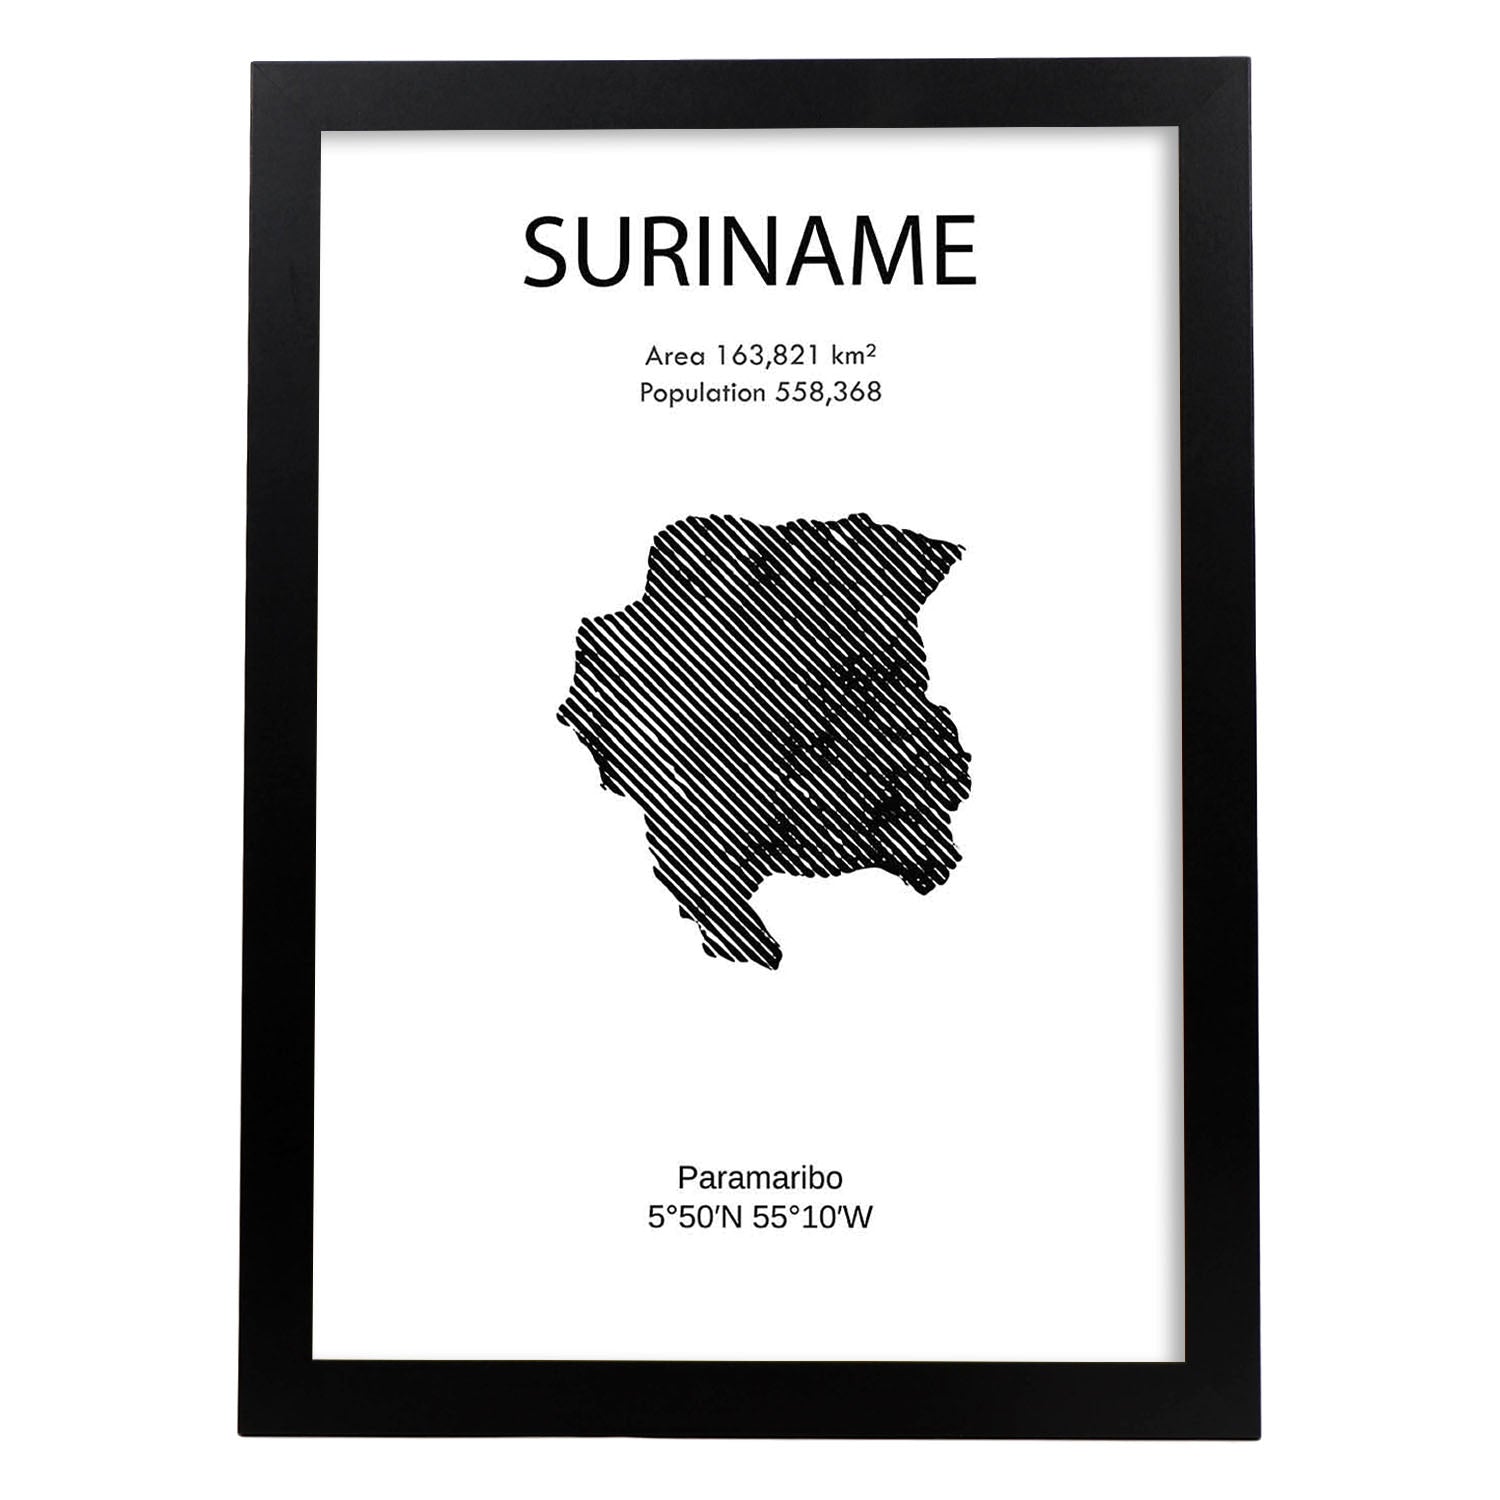 Poster de Surinam. Láminas de paises y continentes del mundo.-Artwork-Nacnic-A4-Marco Negro-Nacnic Estudio SL